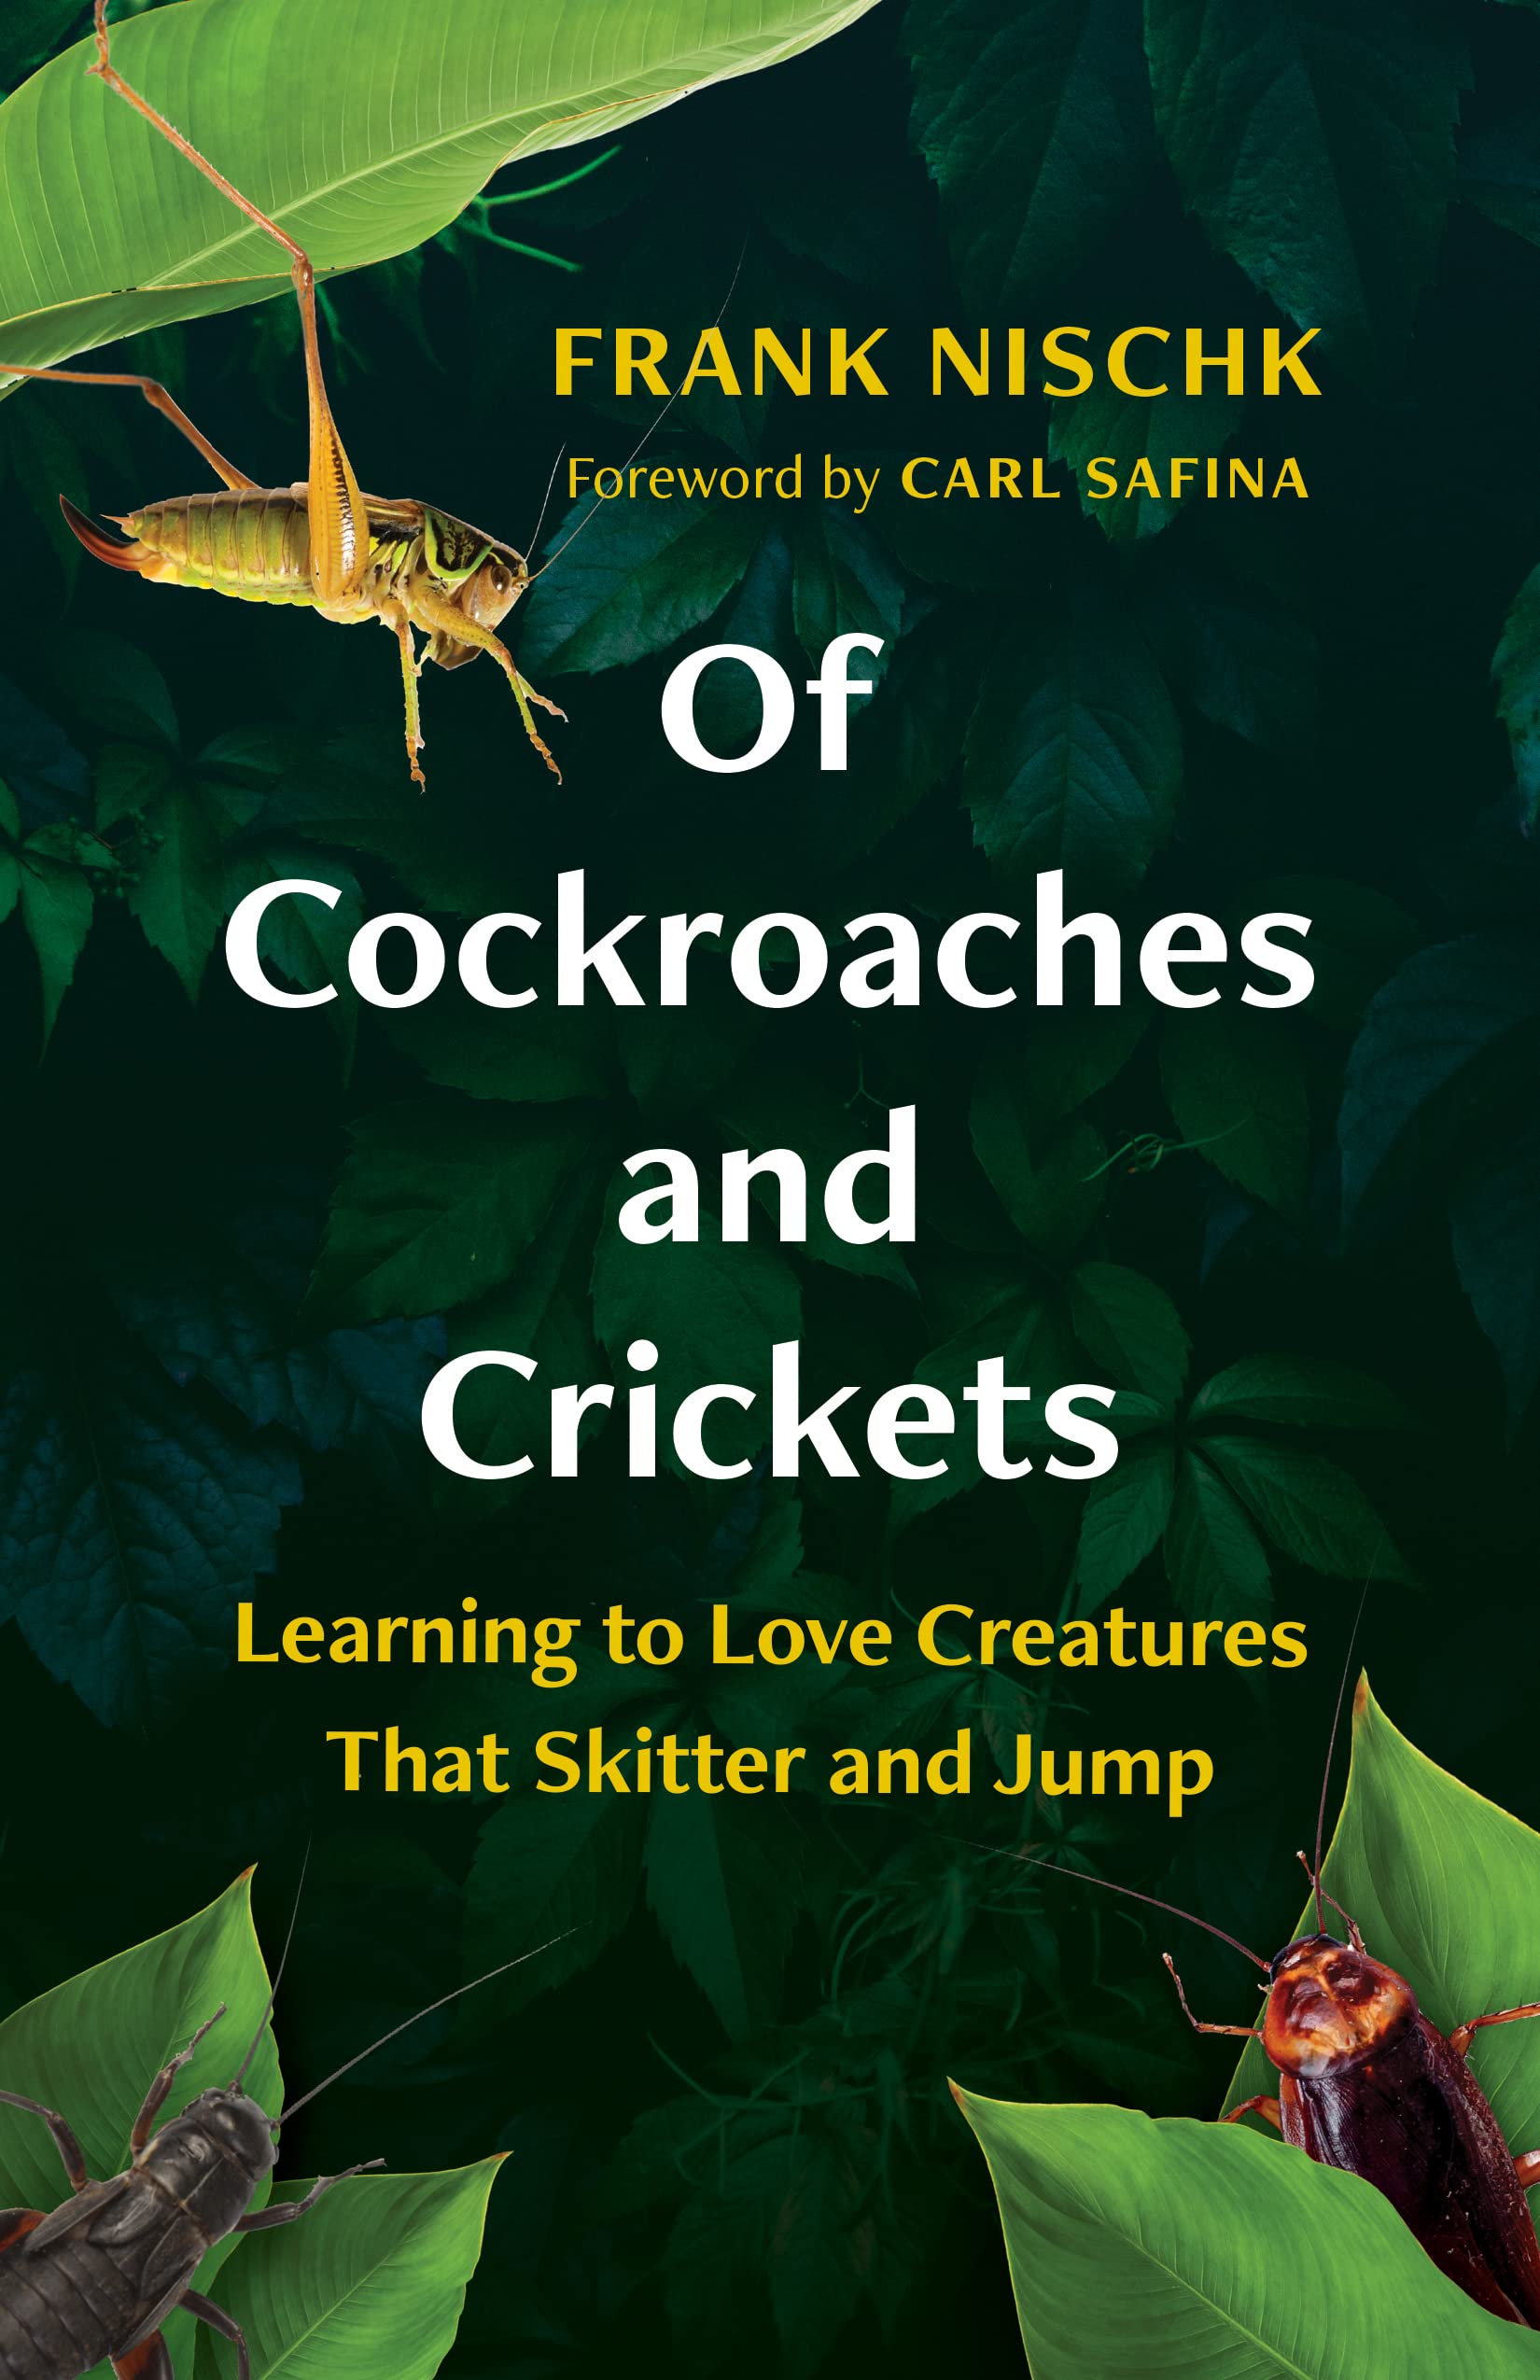 Frank Nischk, Jane Billinghurst, Carl Safina: Of Cockroaches and Crickets (2022, Greystone Books Ltd.)